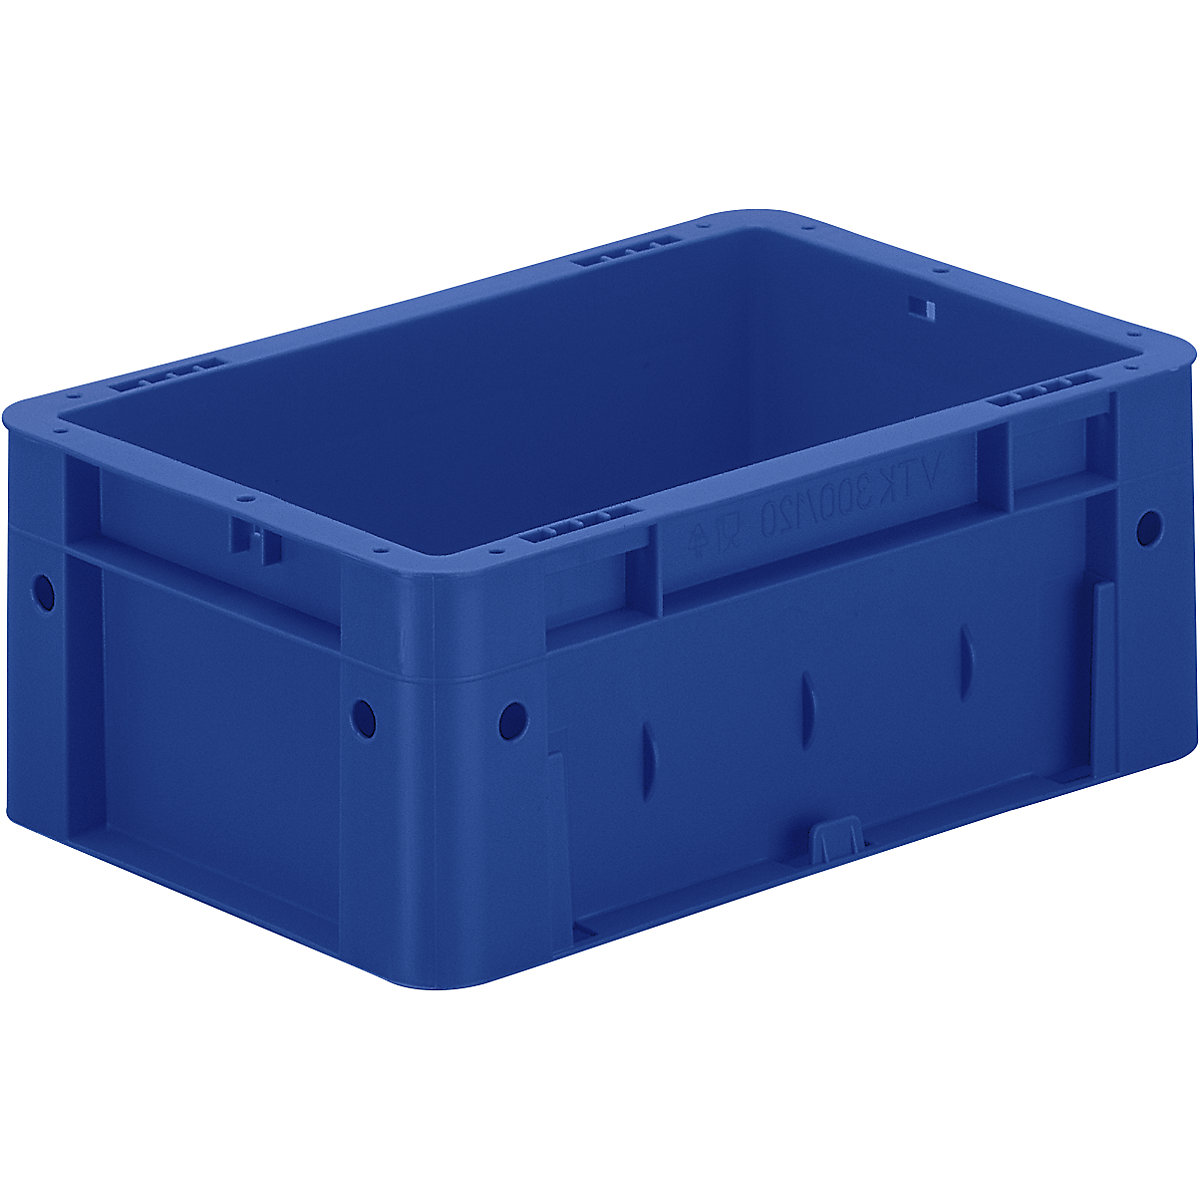 Schwerlast-Euro-Behälter, Polypropylen, Volumen 4,1 l, LxBxH 300 x 200 x 120 mm, Wände geschlossen, Boden geschlossen, blau, VE 8 Stk-3